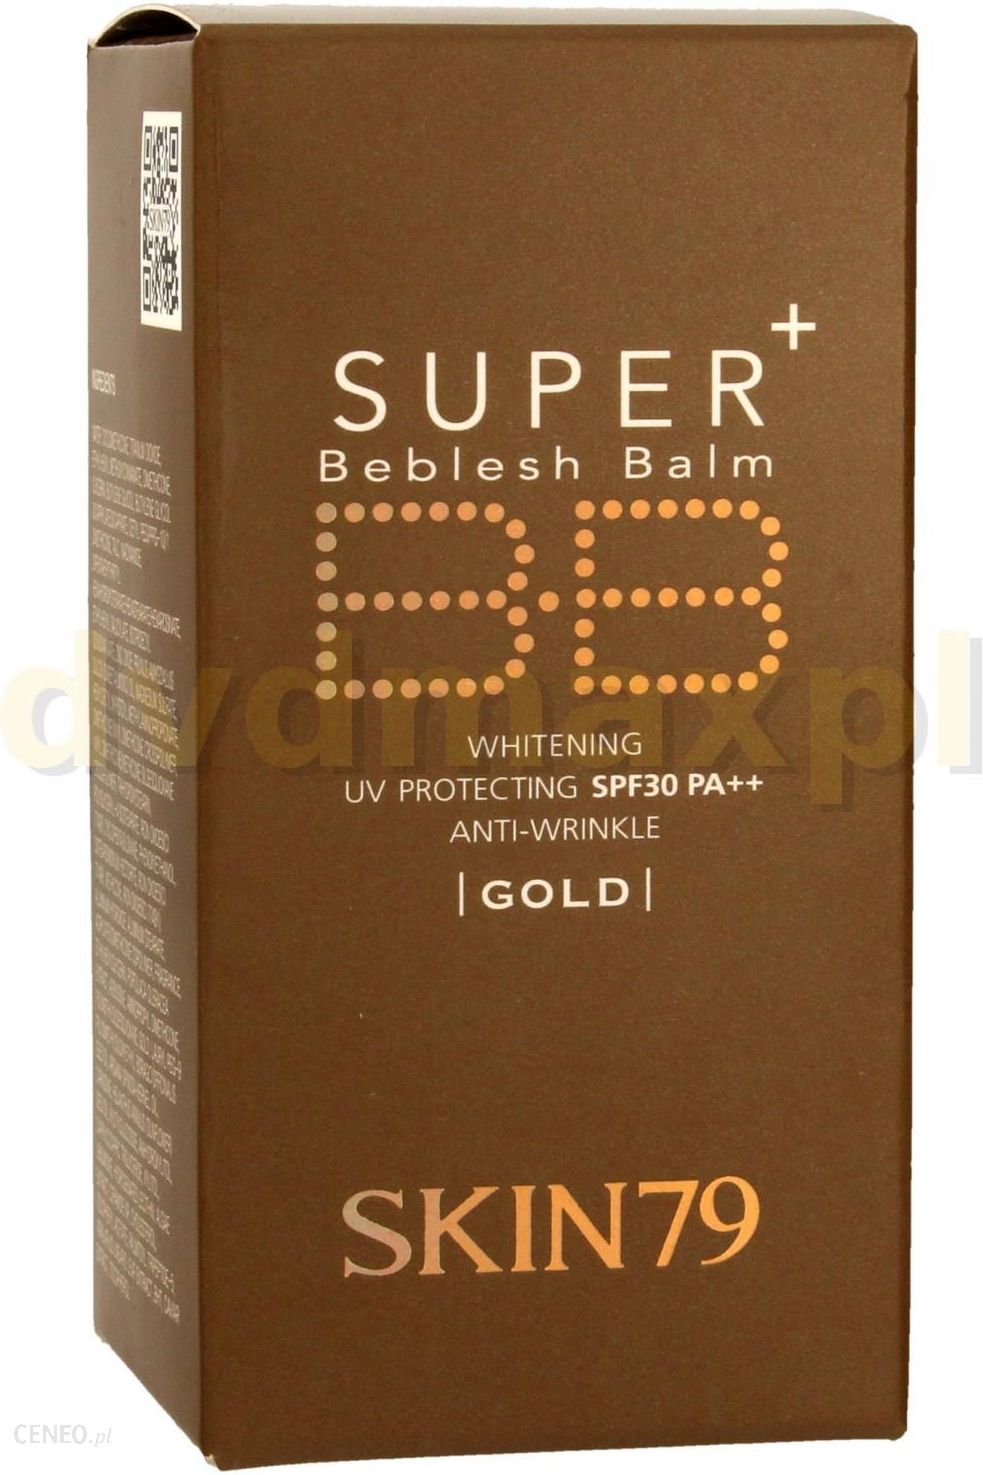 SKIN79 Vip Gold Super Beblesh Balm Triple Functions SPF30 PA 40g